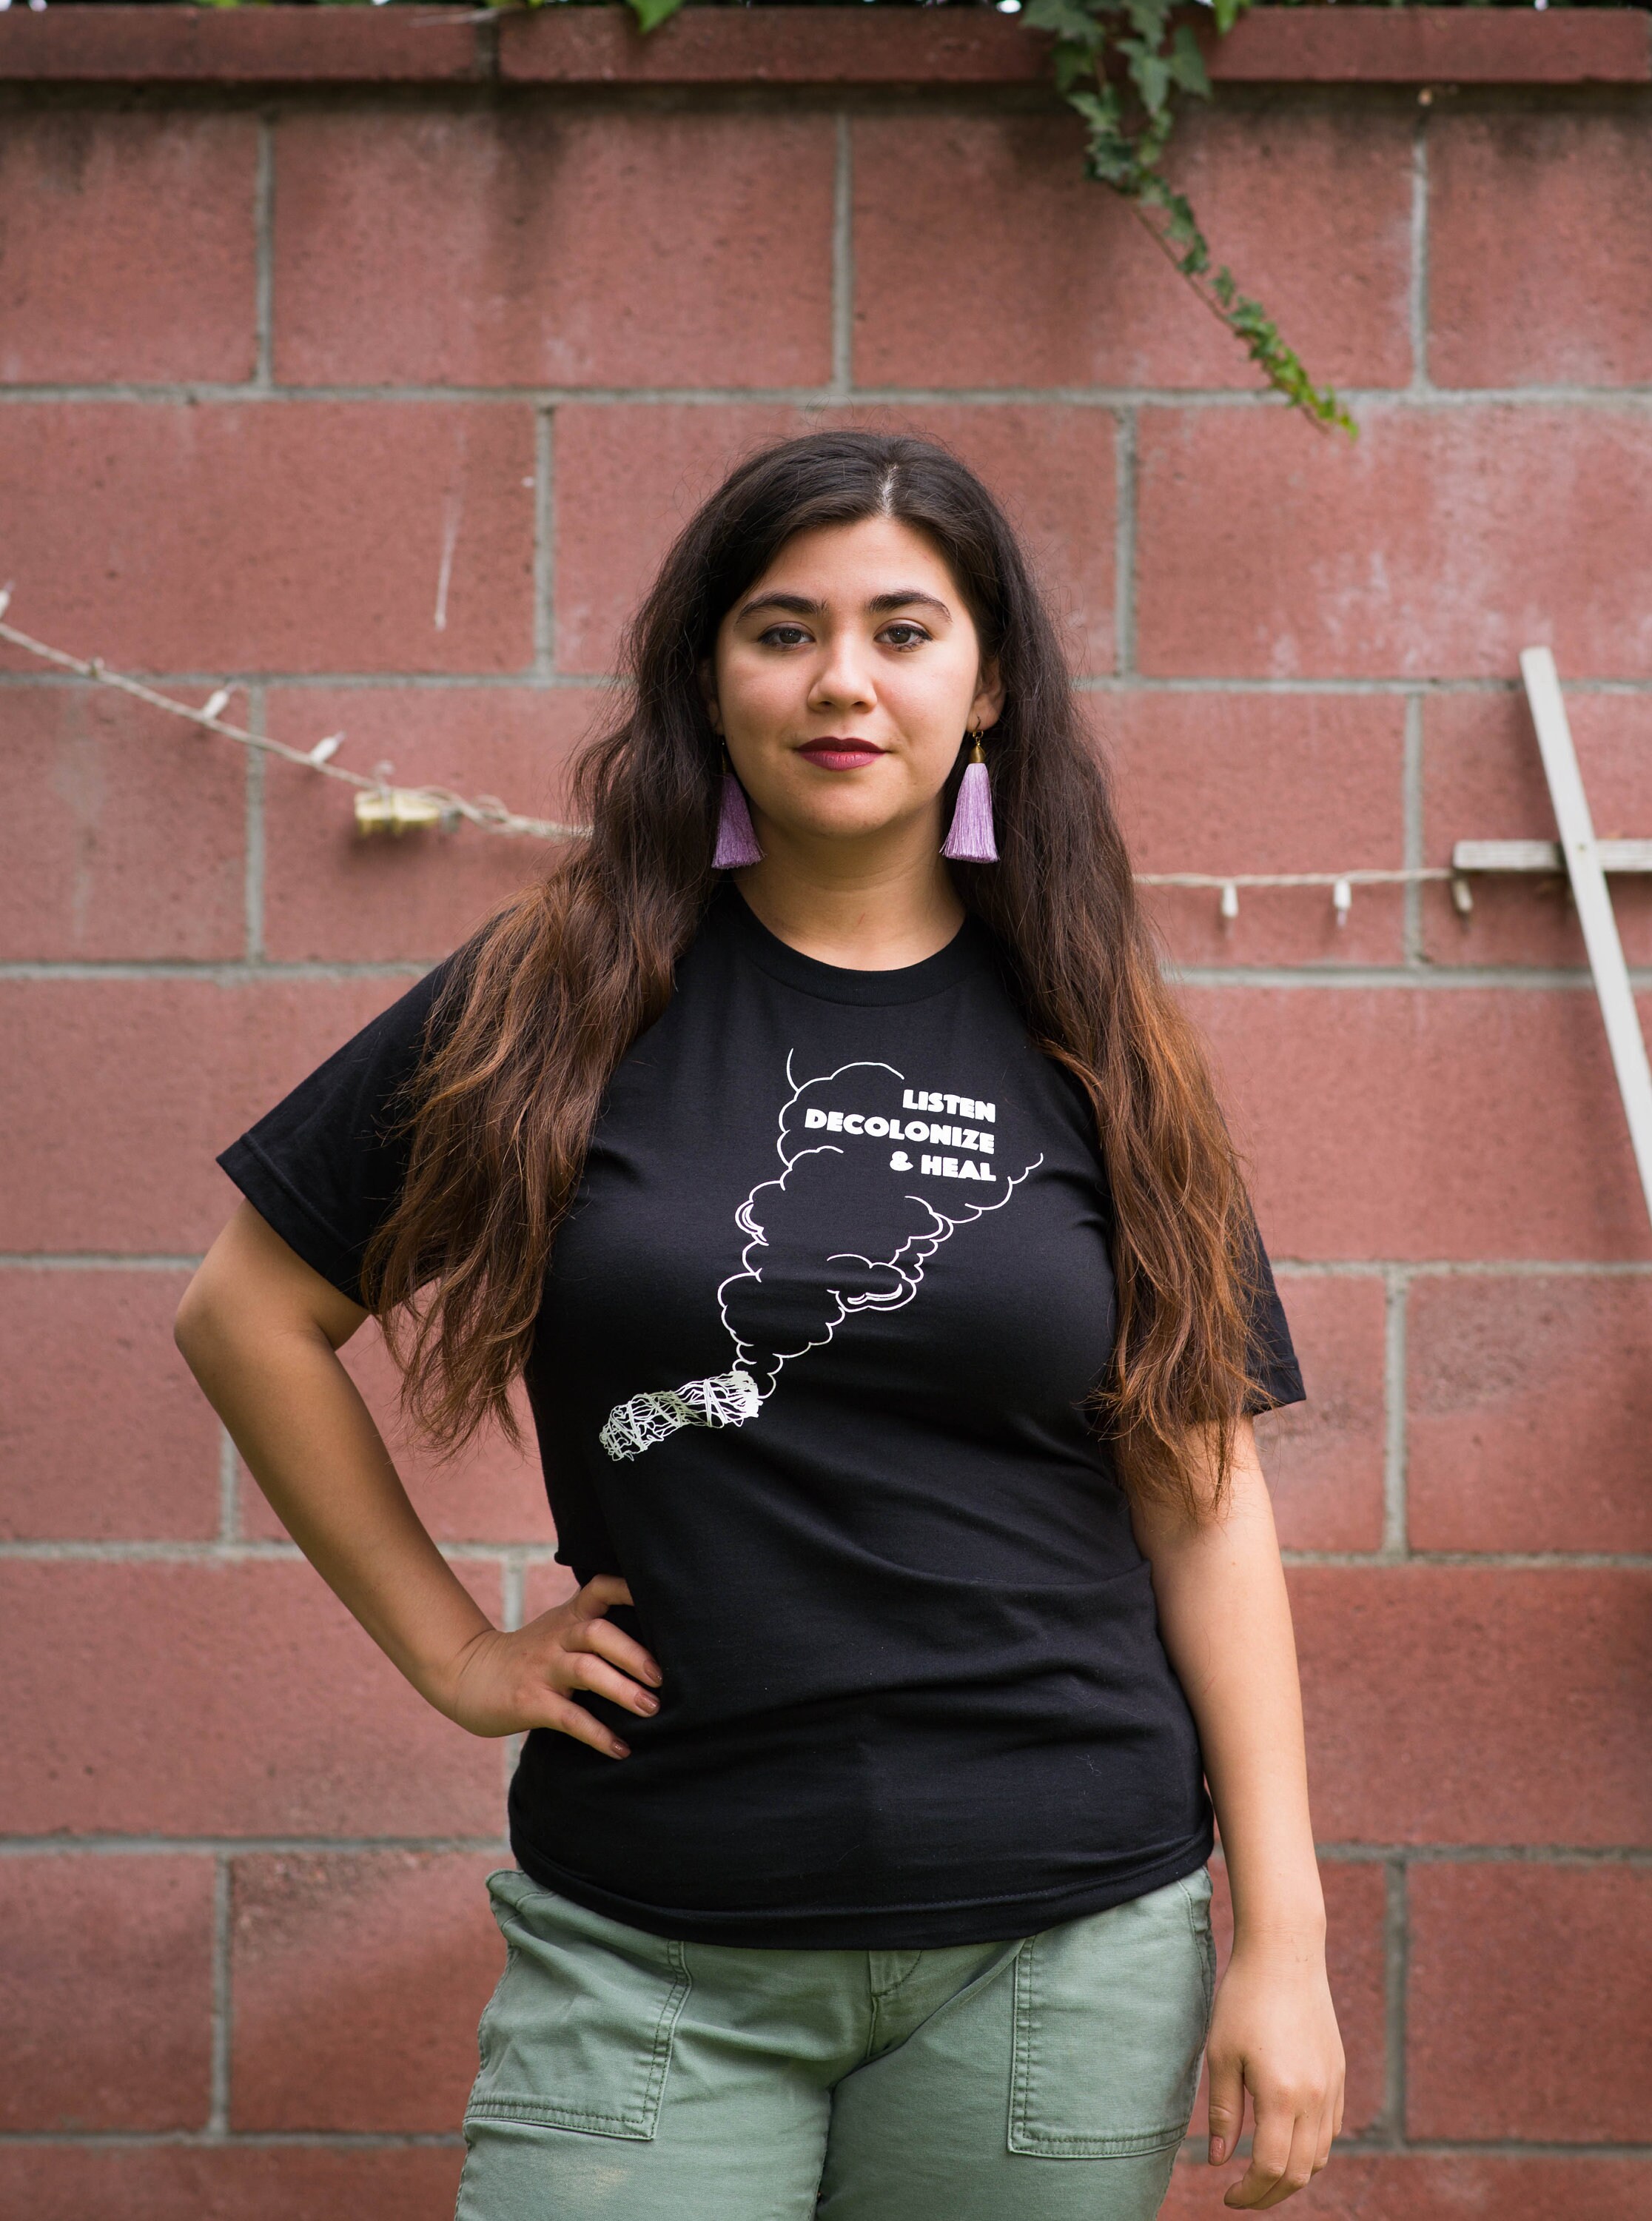 Listen Decolonize & Heal Shirt With Burning Sage Image Shirt - Etsy